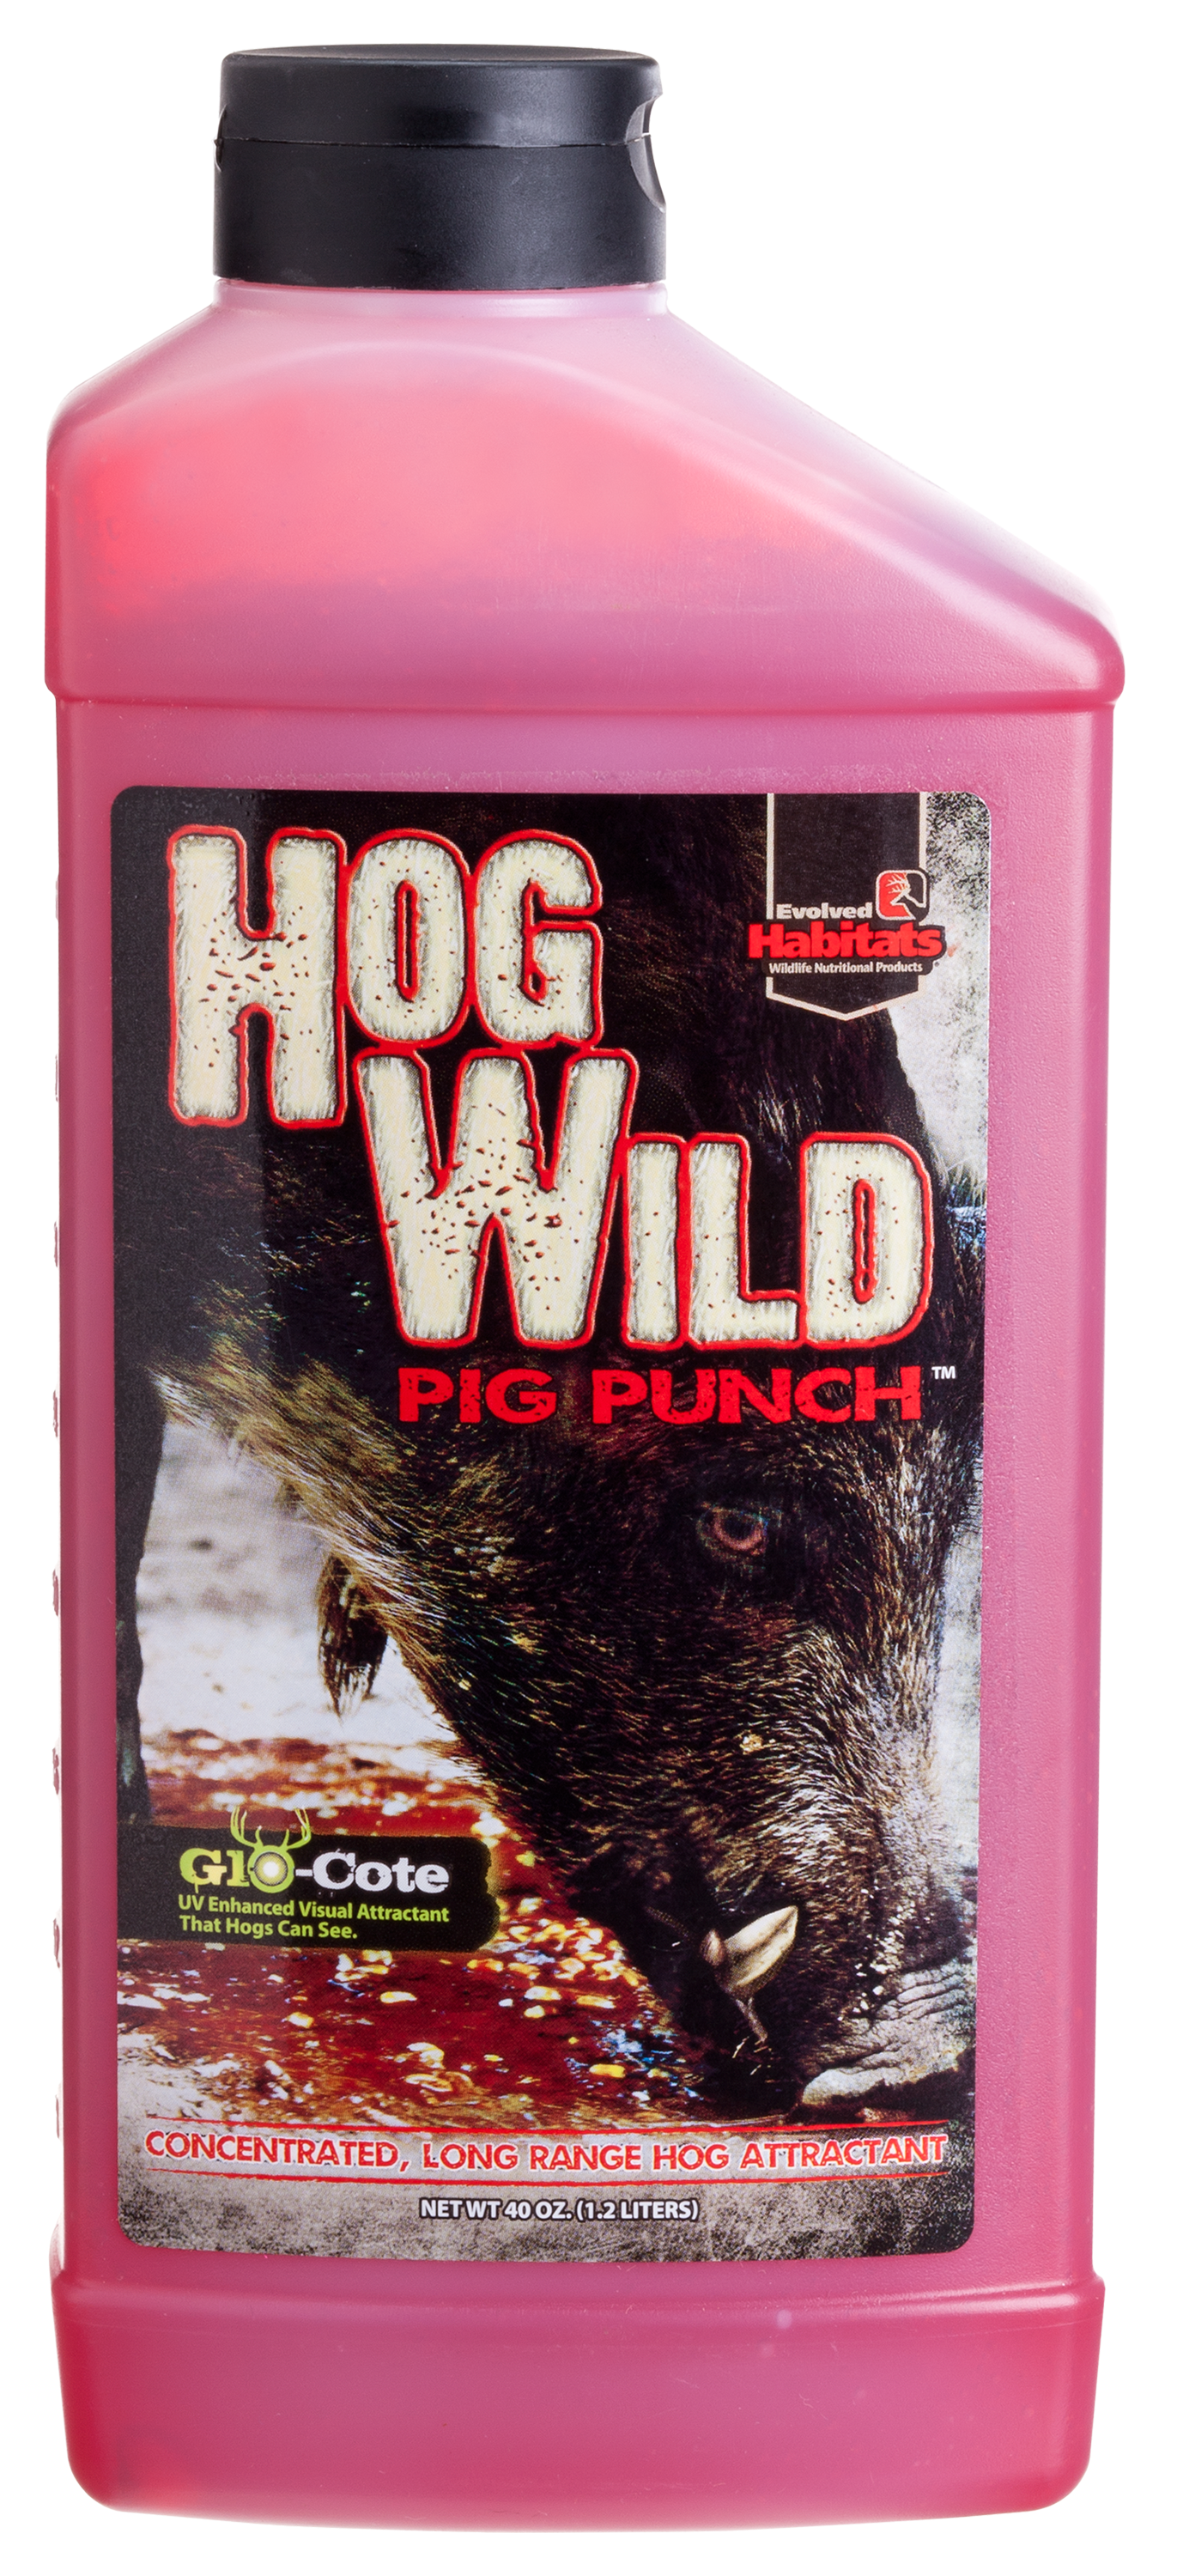 Evolved Habitats Hog Wild Pig Punch Wild Hog Attractant